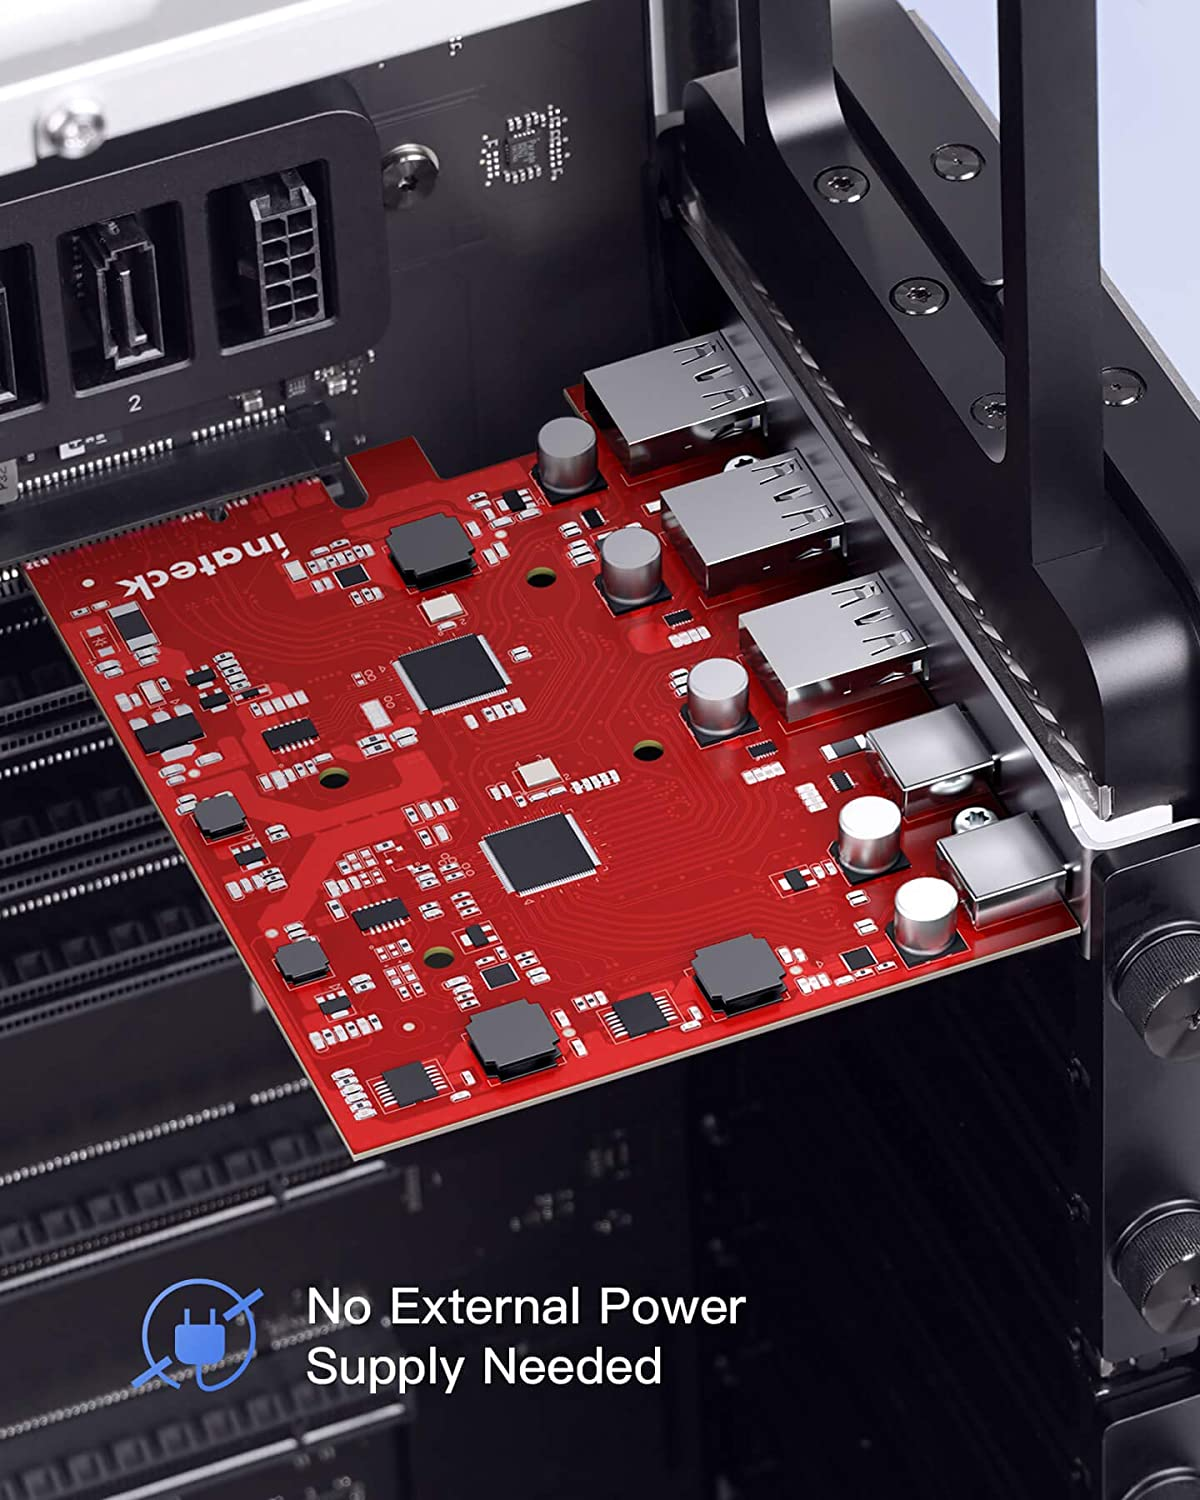 INATECK PCI Express-Karte mit 3.2 20 RedComets Karte 2 Gbit/s U21 USB Express Bandbreite zu karte PCIe Gen